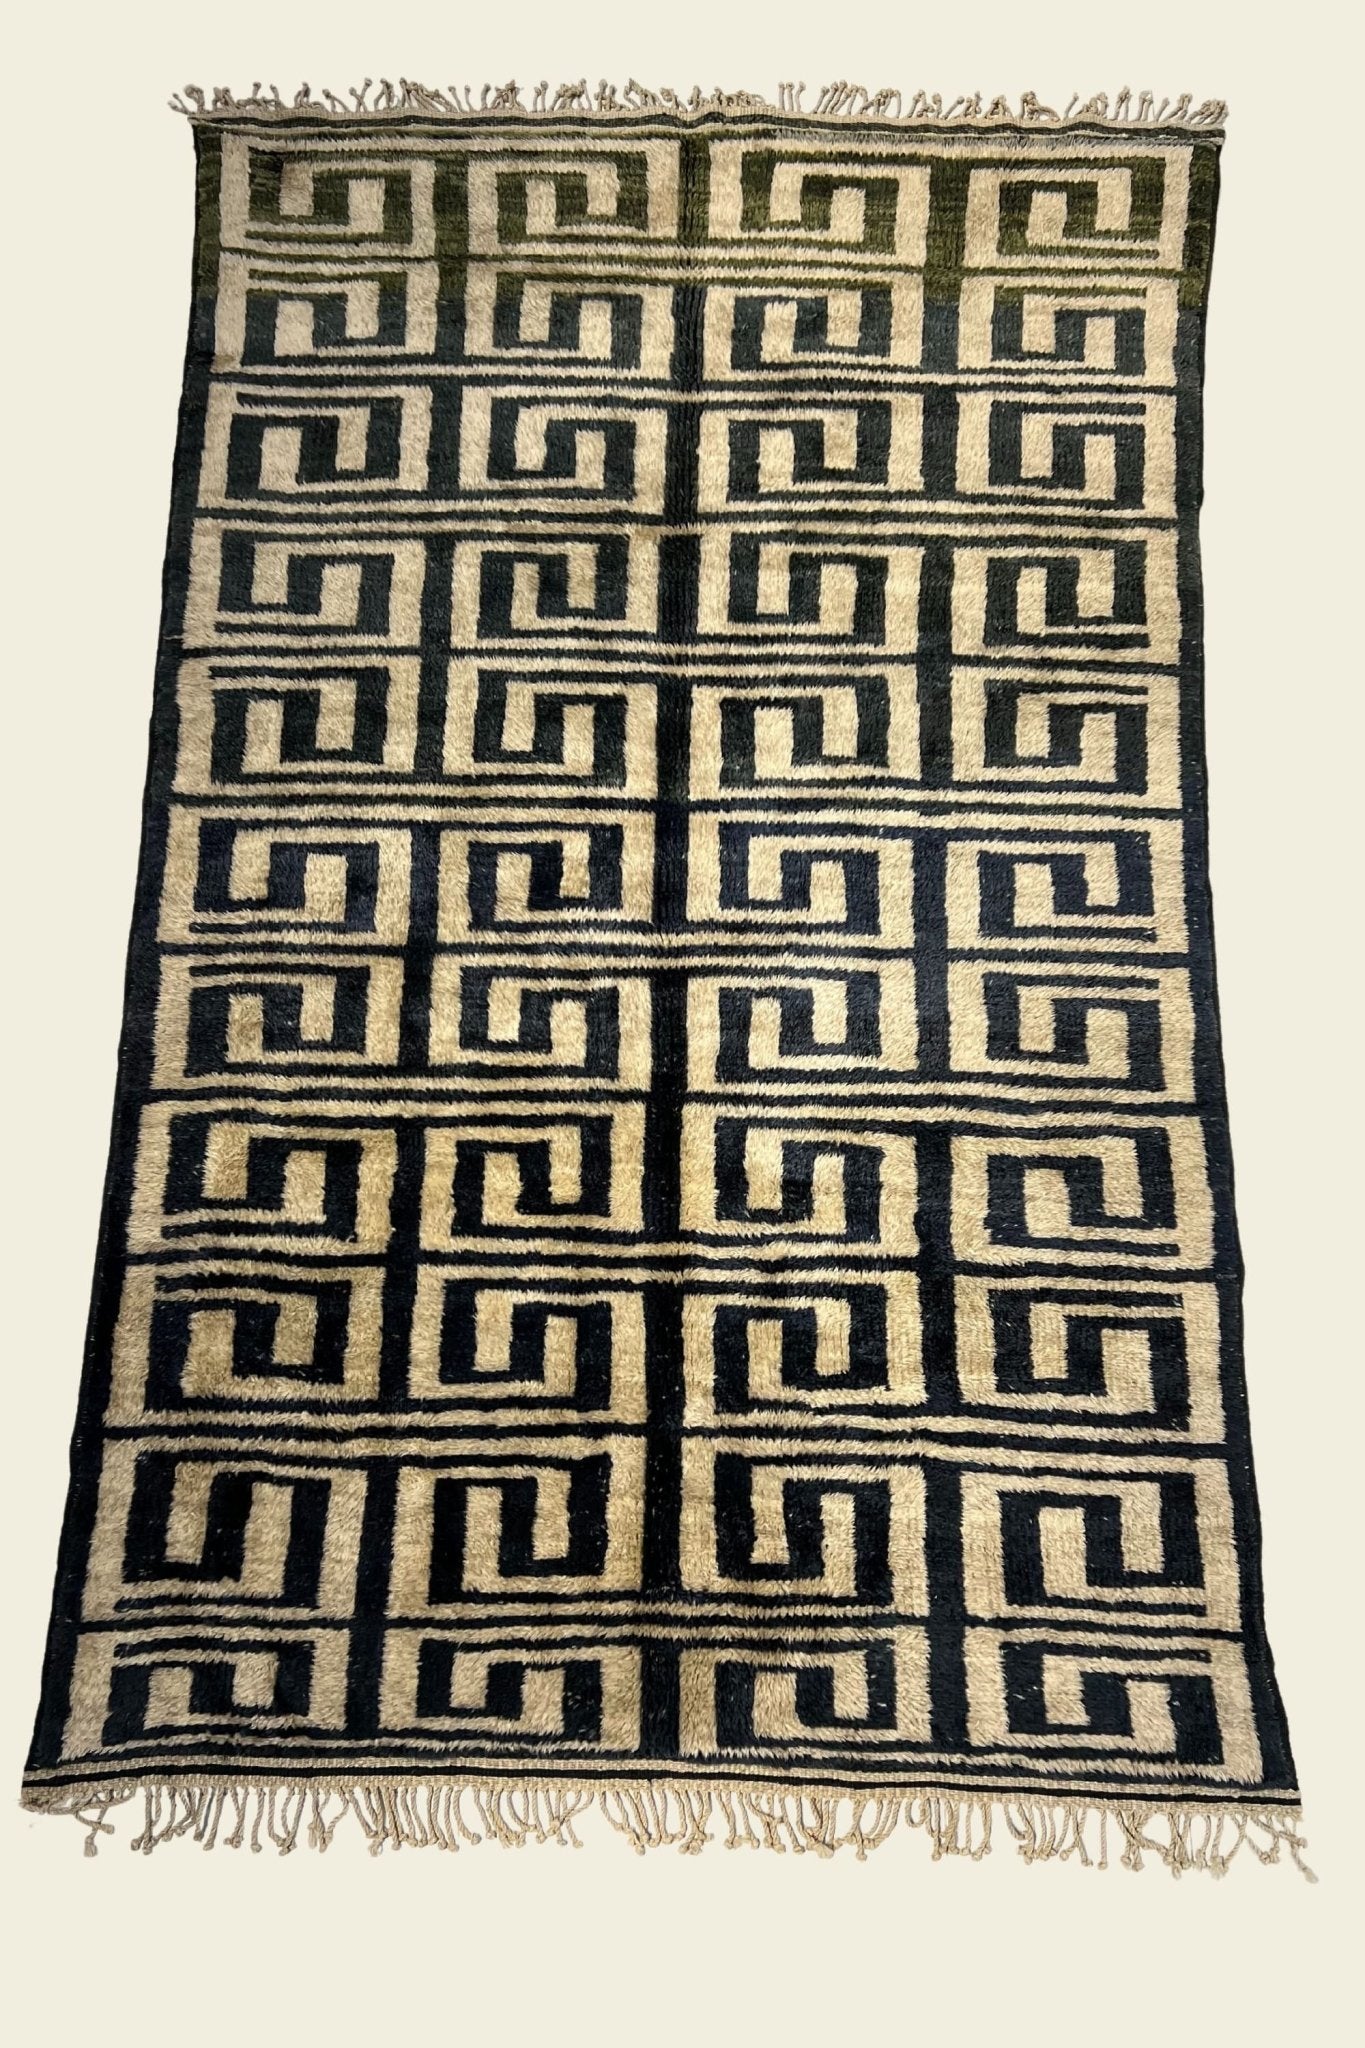 Contemporary Beni Mrirt Berber Rug 6'79" x 9'35" - 207 cm x 285 cm (Wool) - Dar Bouchaib Marrakech